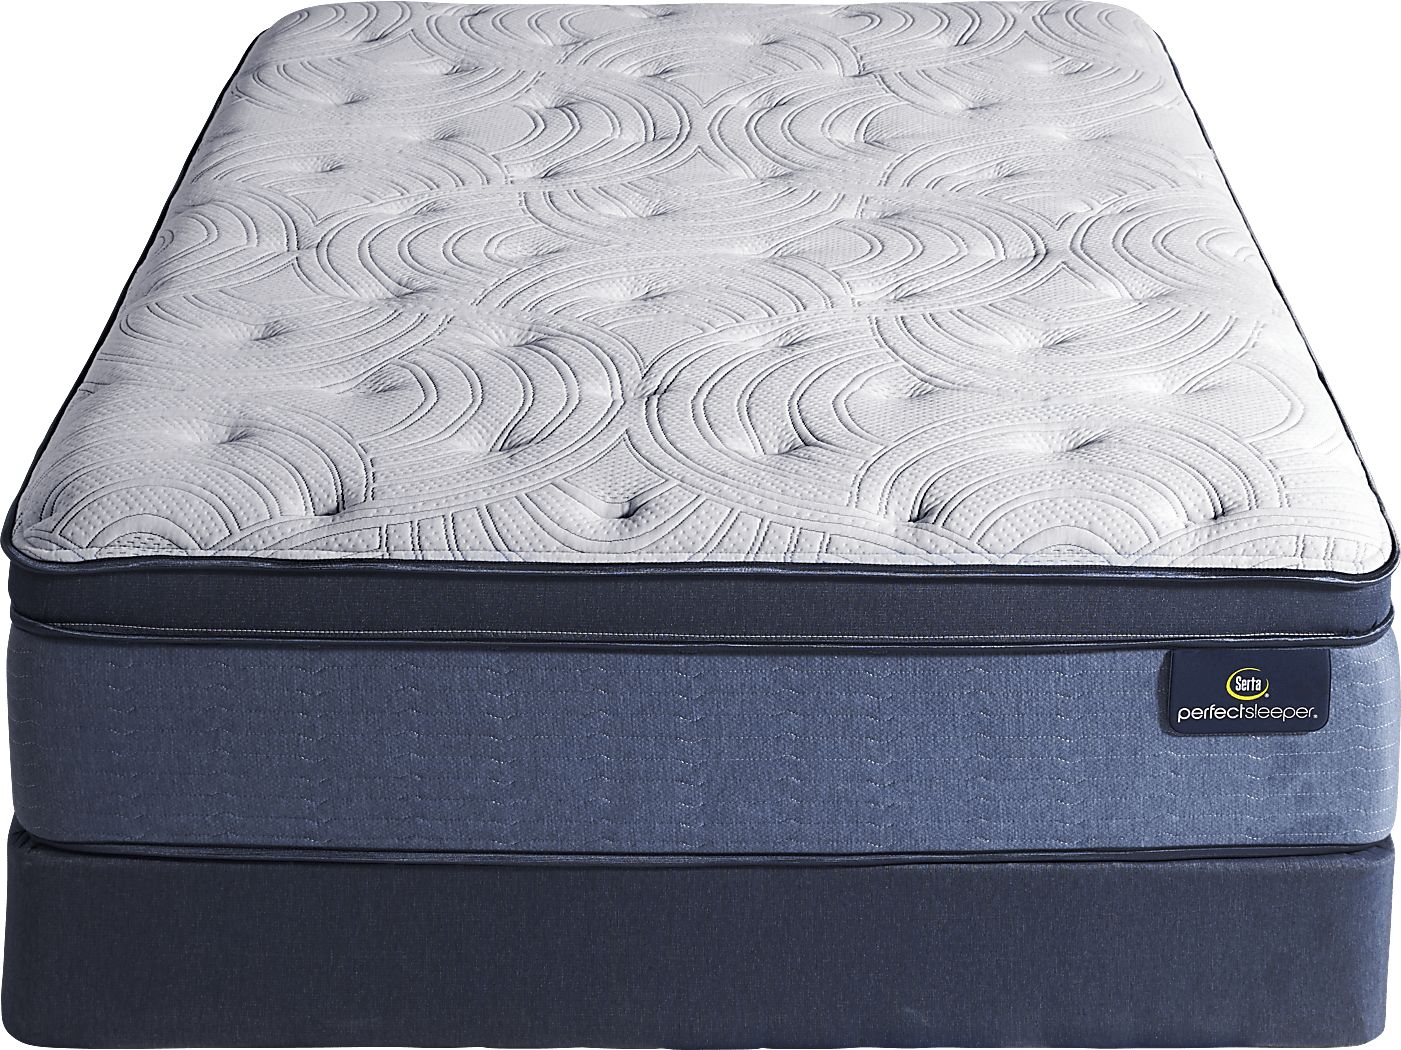 serta perfect sleeper dortmund queen size medium mattress